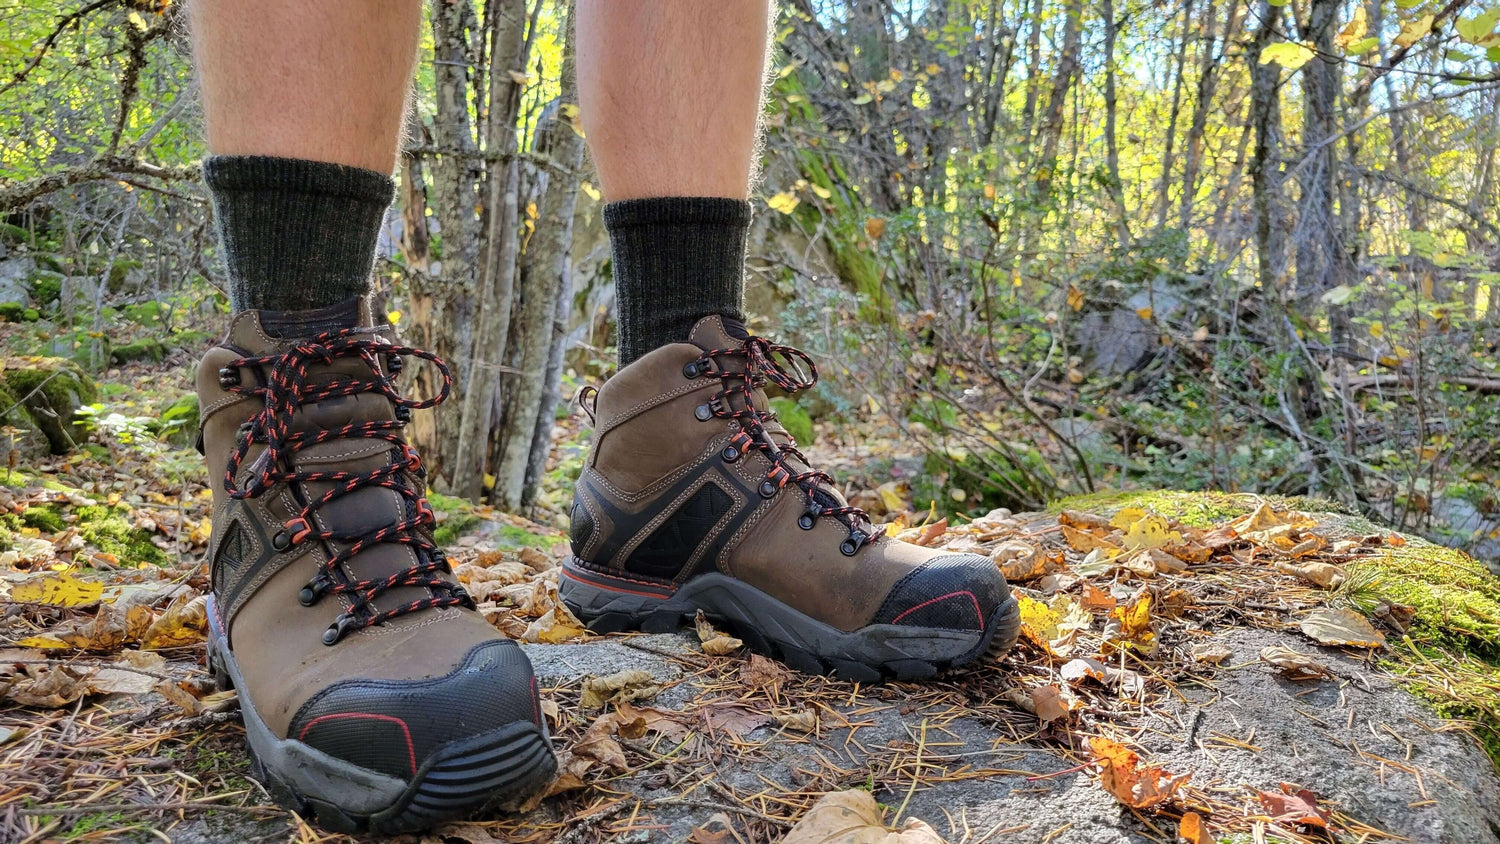 Forest Green Crew Midweight Merino Wool Kootenay Socks in hiking boots